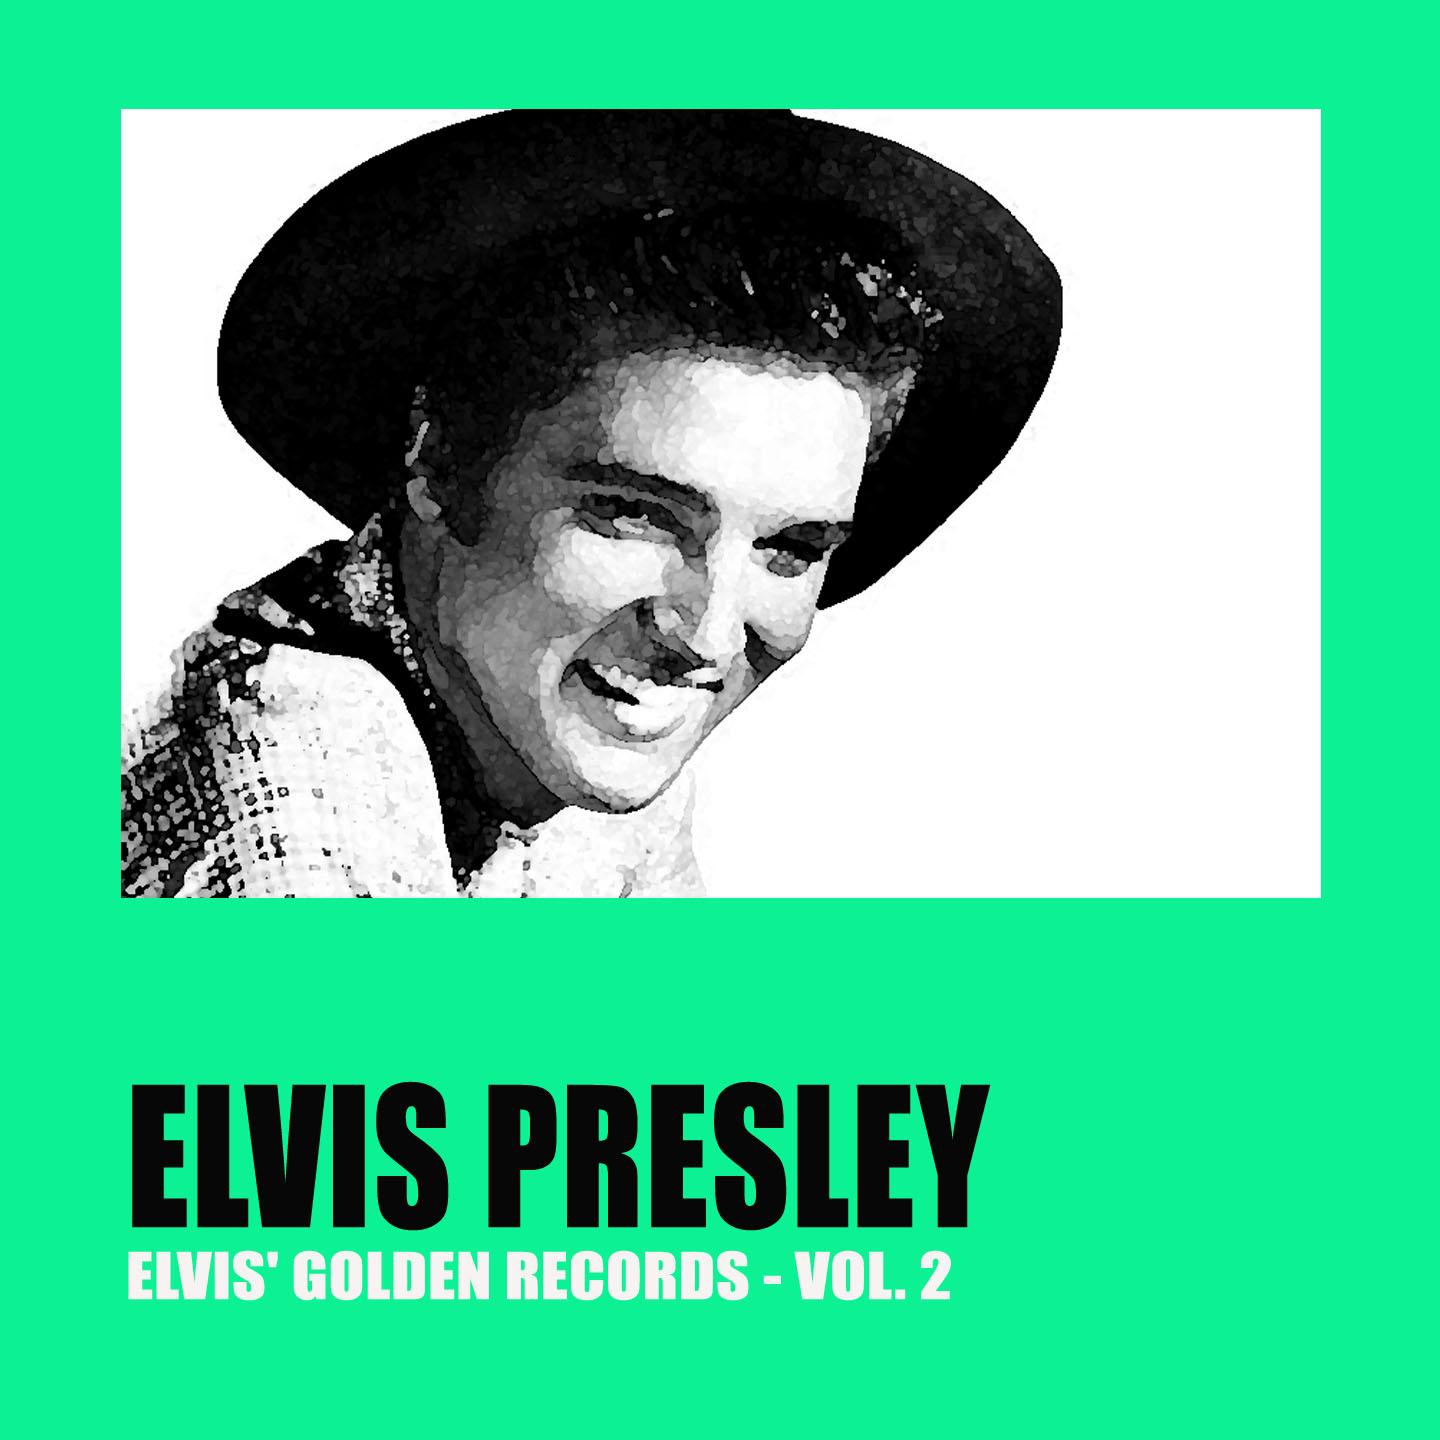 Elvis' Golden Records Vol. 2